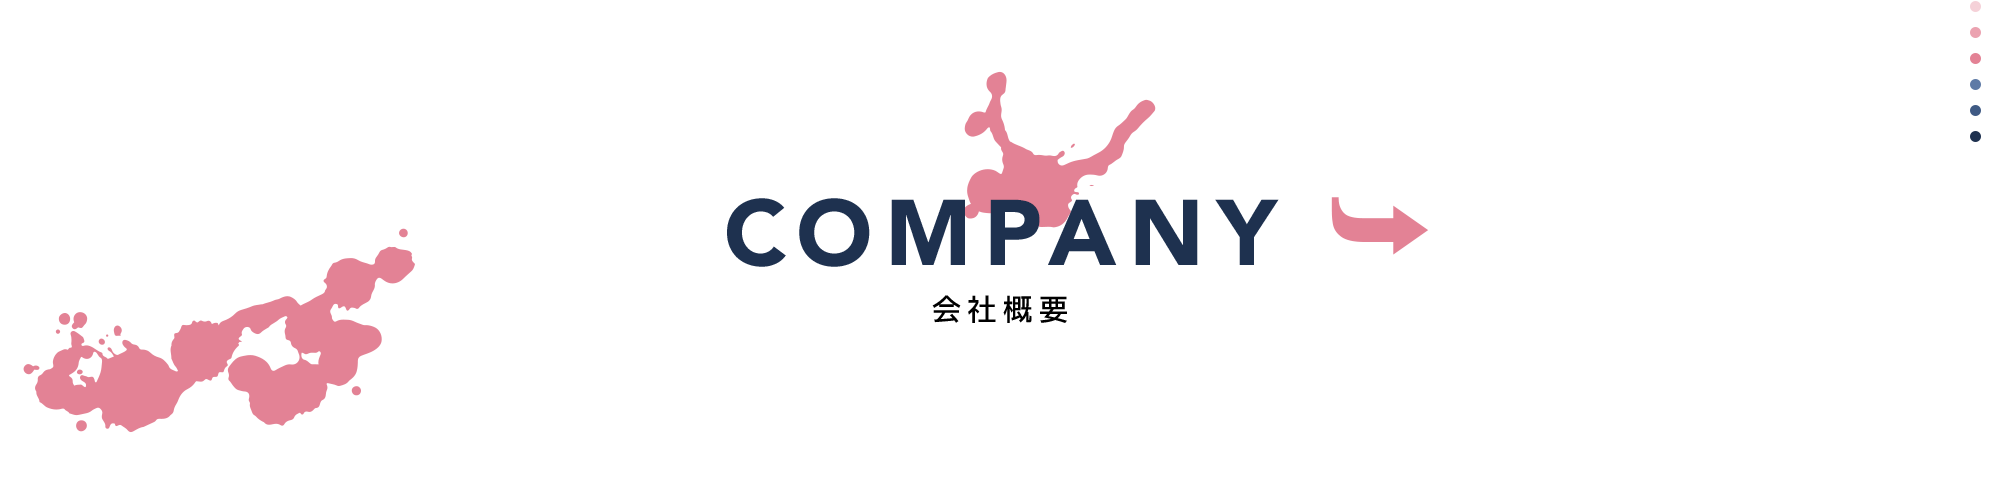 banner_company